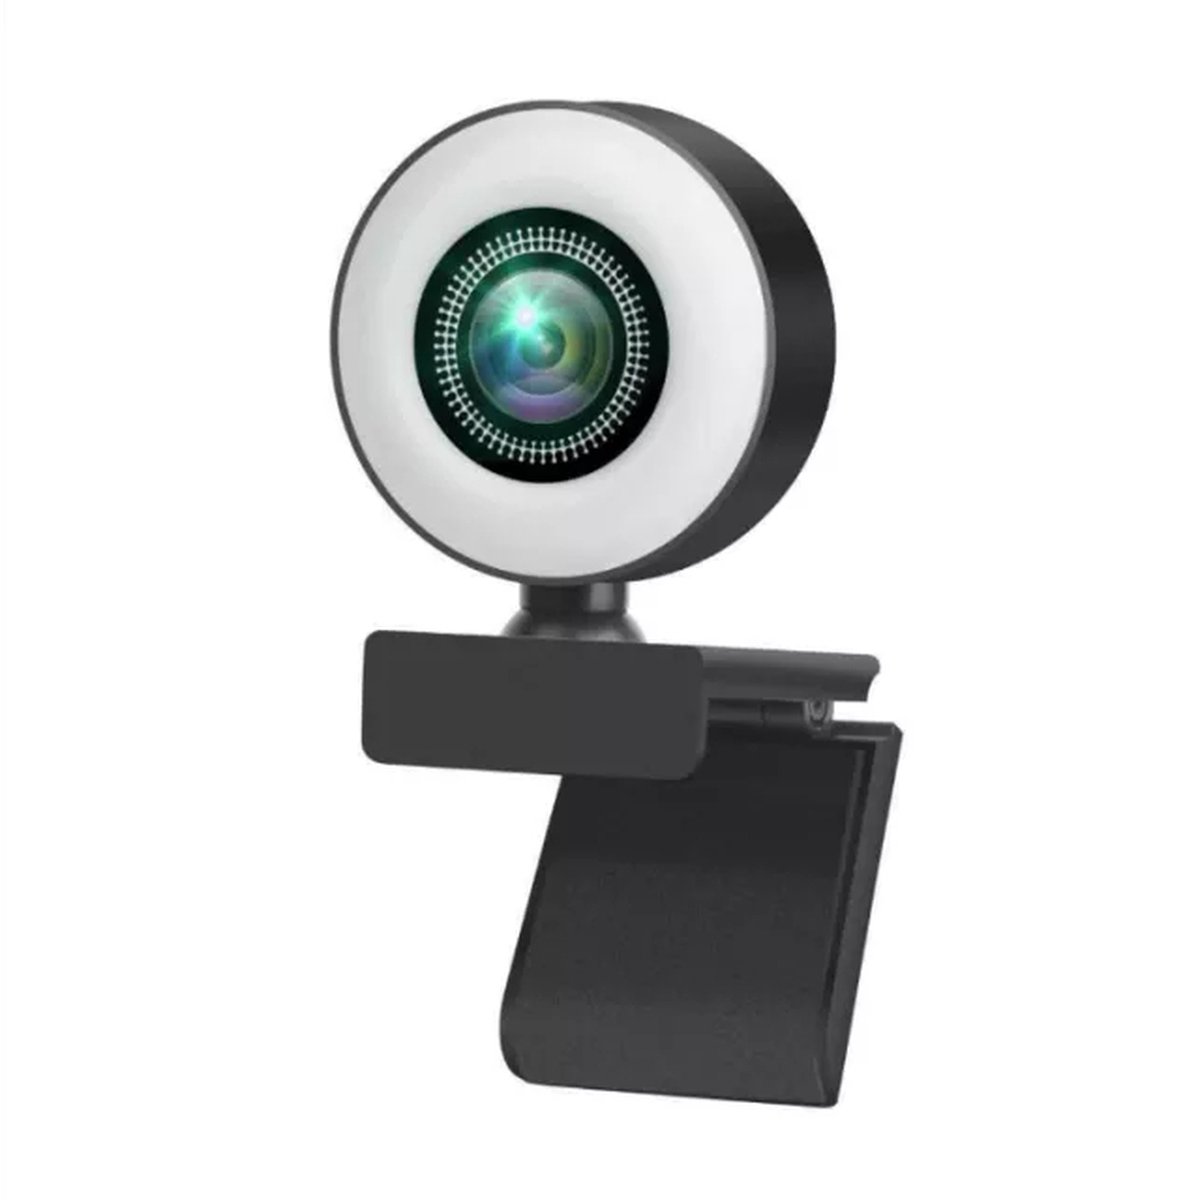 Webcam 1920x1080 FULL HD Hoog Kwaliteit Camera Usb / Extra veiligheid Cover / Professioneel AUTOFOCUS Webcam / Webcam voor pc met USB / Camera voor vergadering / Windows en Apple Mac / Meeting / Skype / Facetime / Zoom / Twitch